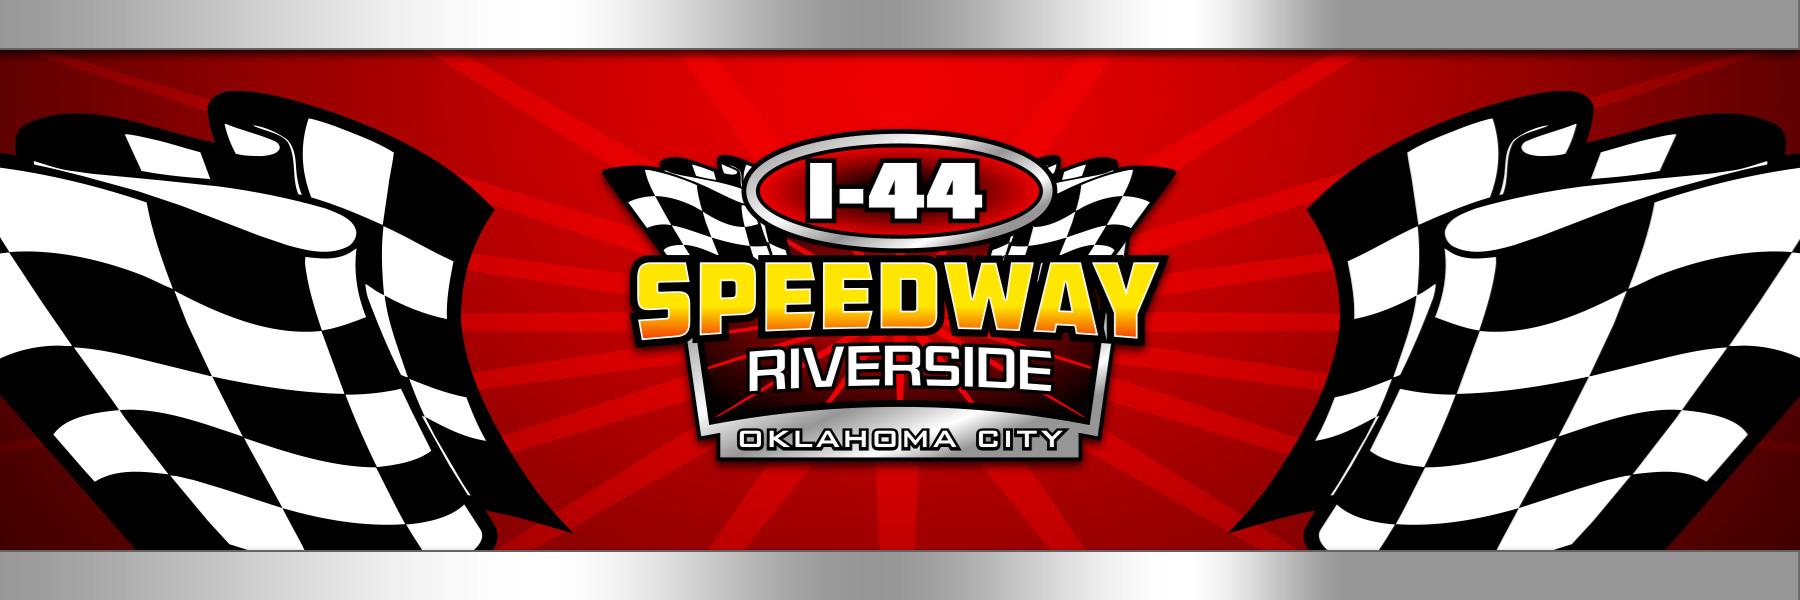 5/1/2021 - I-44 Riverside Speedway